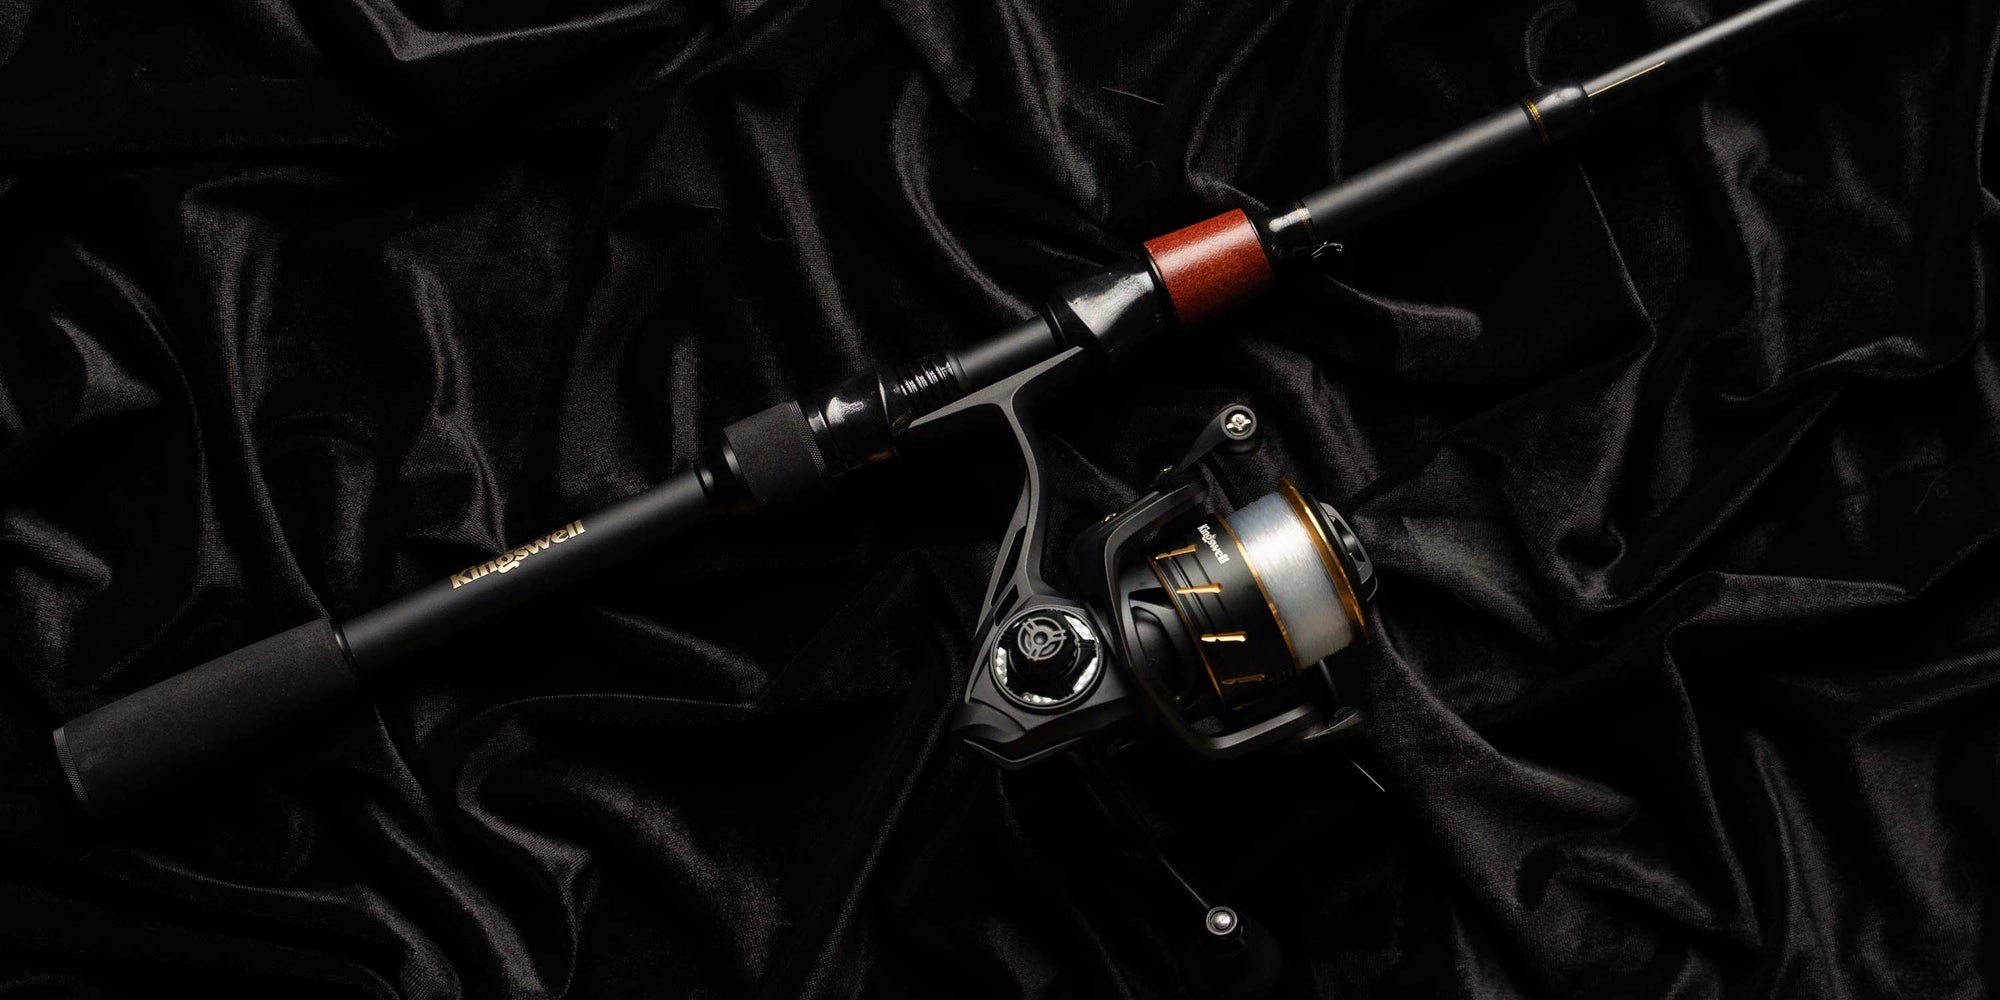 Tlilyy Portable fishing rod Lightweight Fishing Rod And Reel Combo